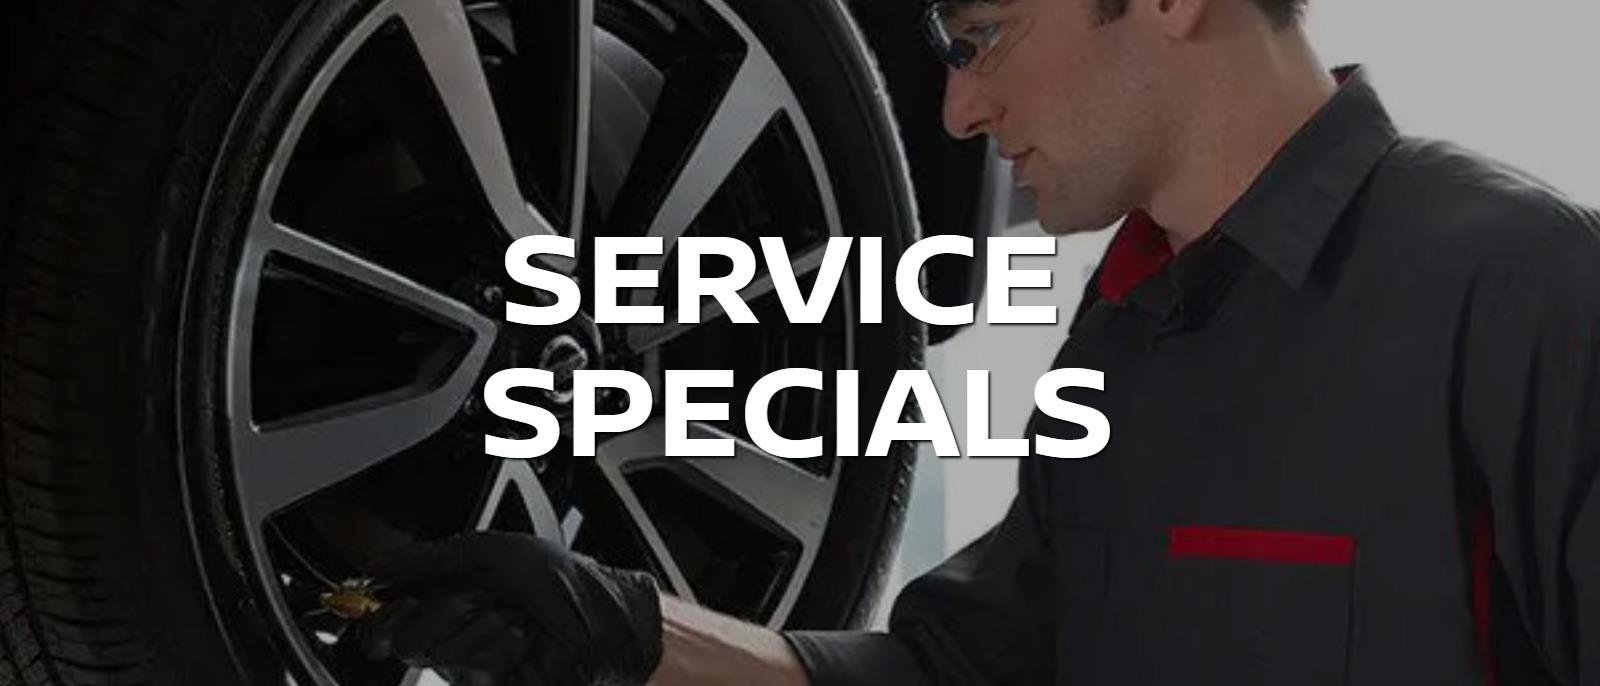 Home page CTA -  Service Specials